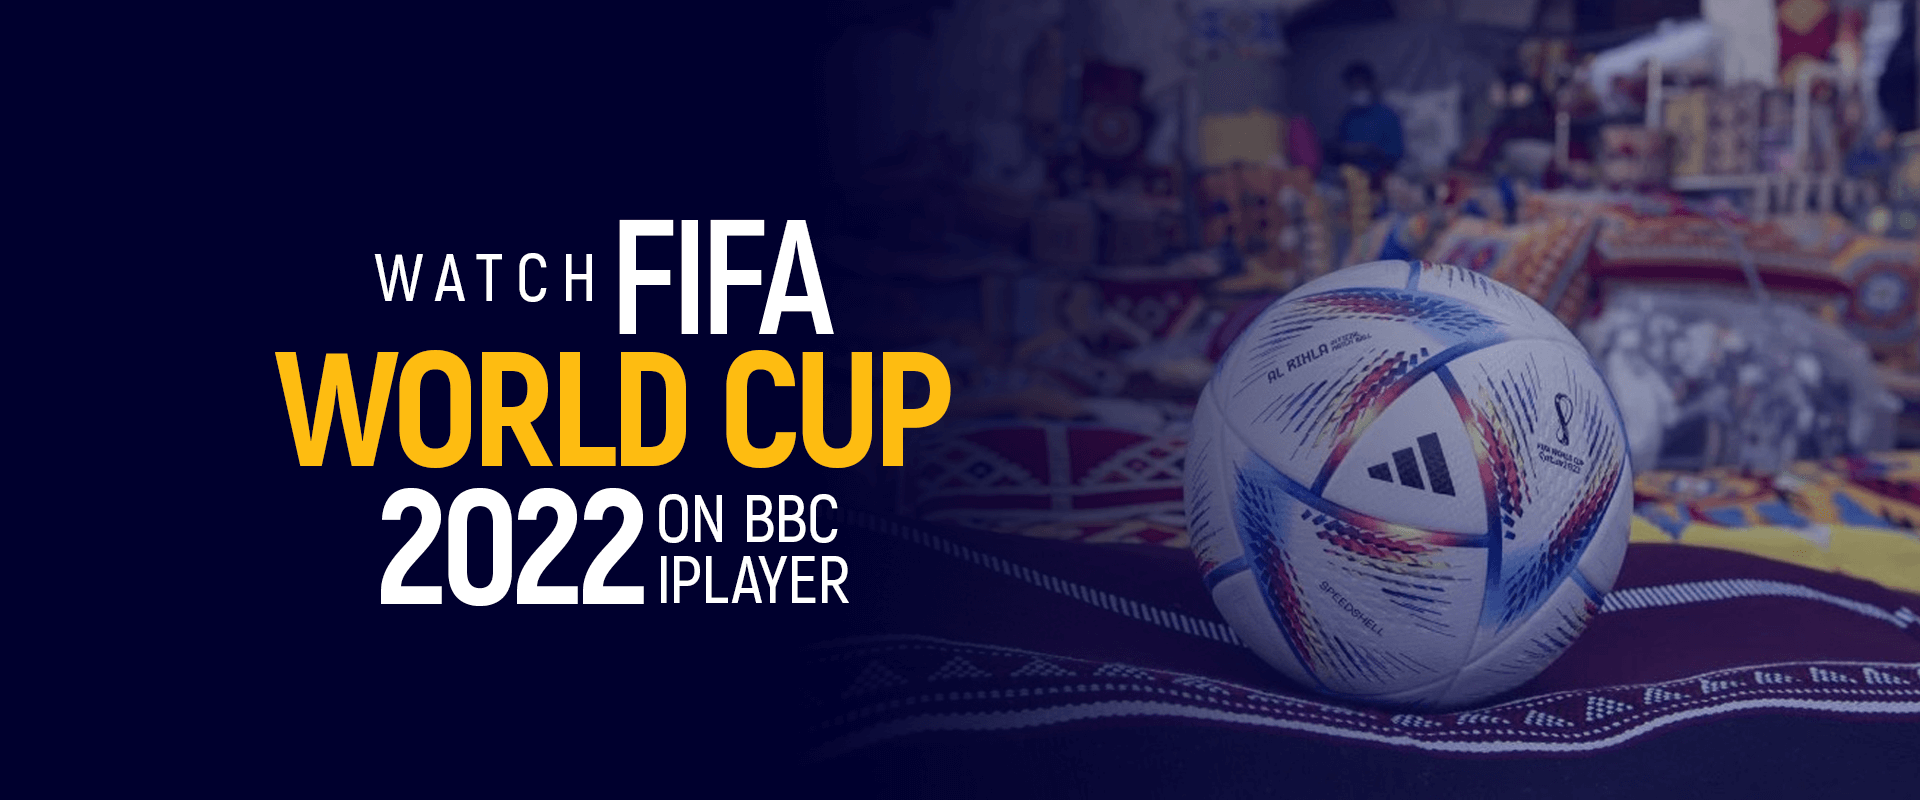 bbc live stream world cup